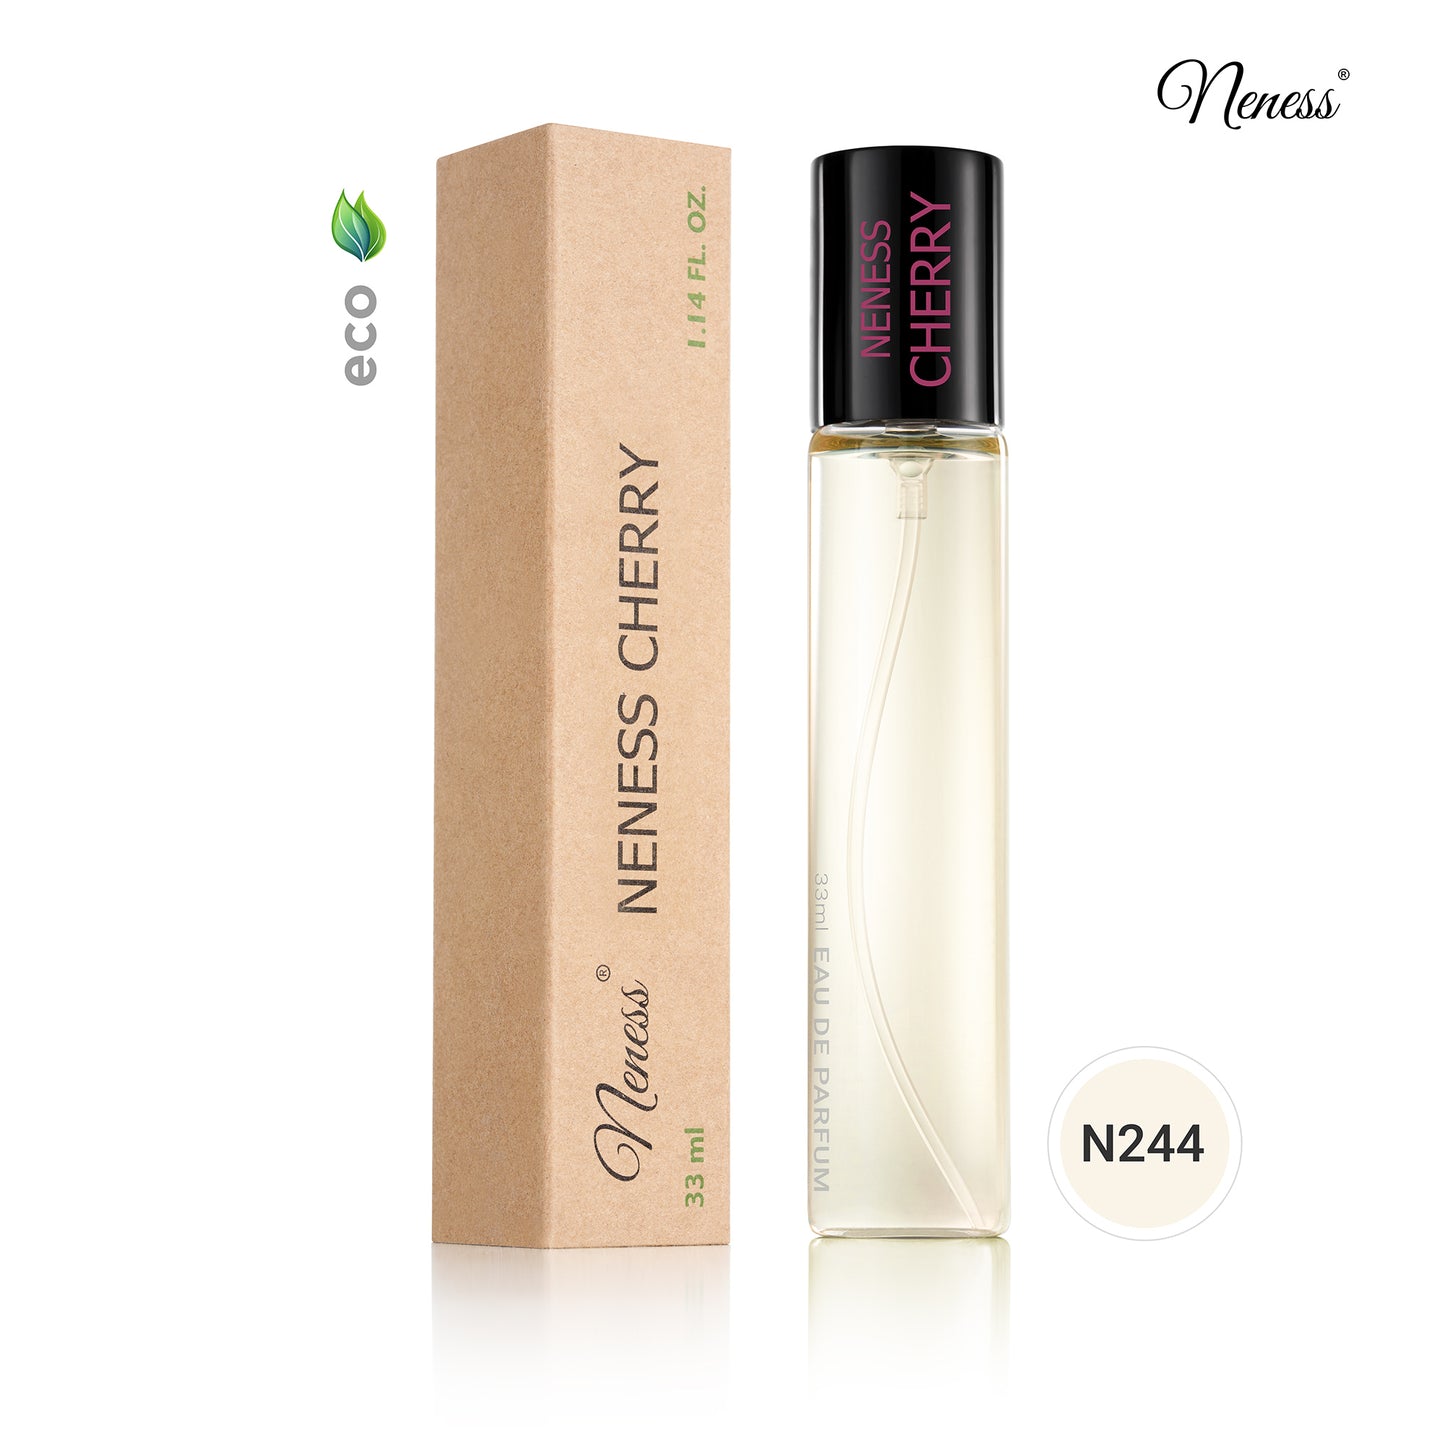 N244. Neness Cherry - 33 ml - Unisex Perfumes